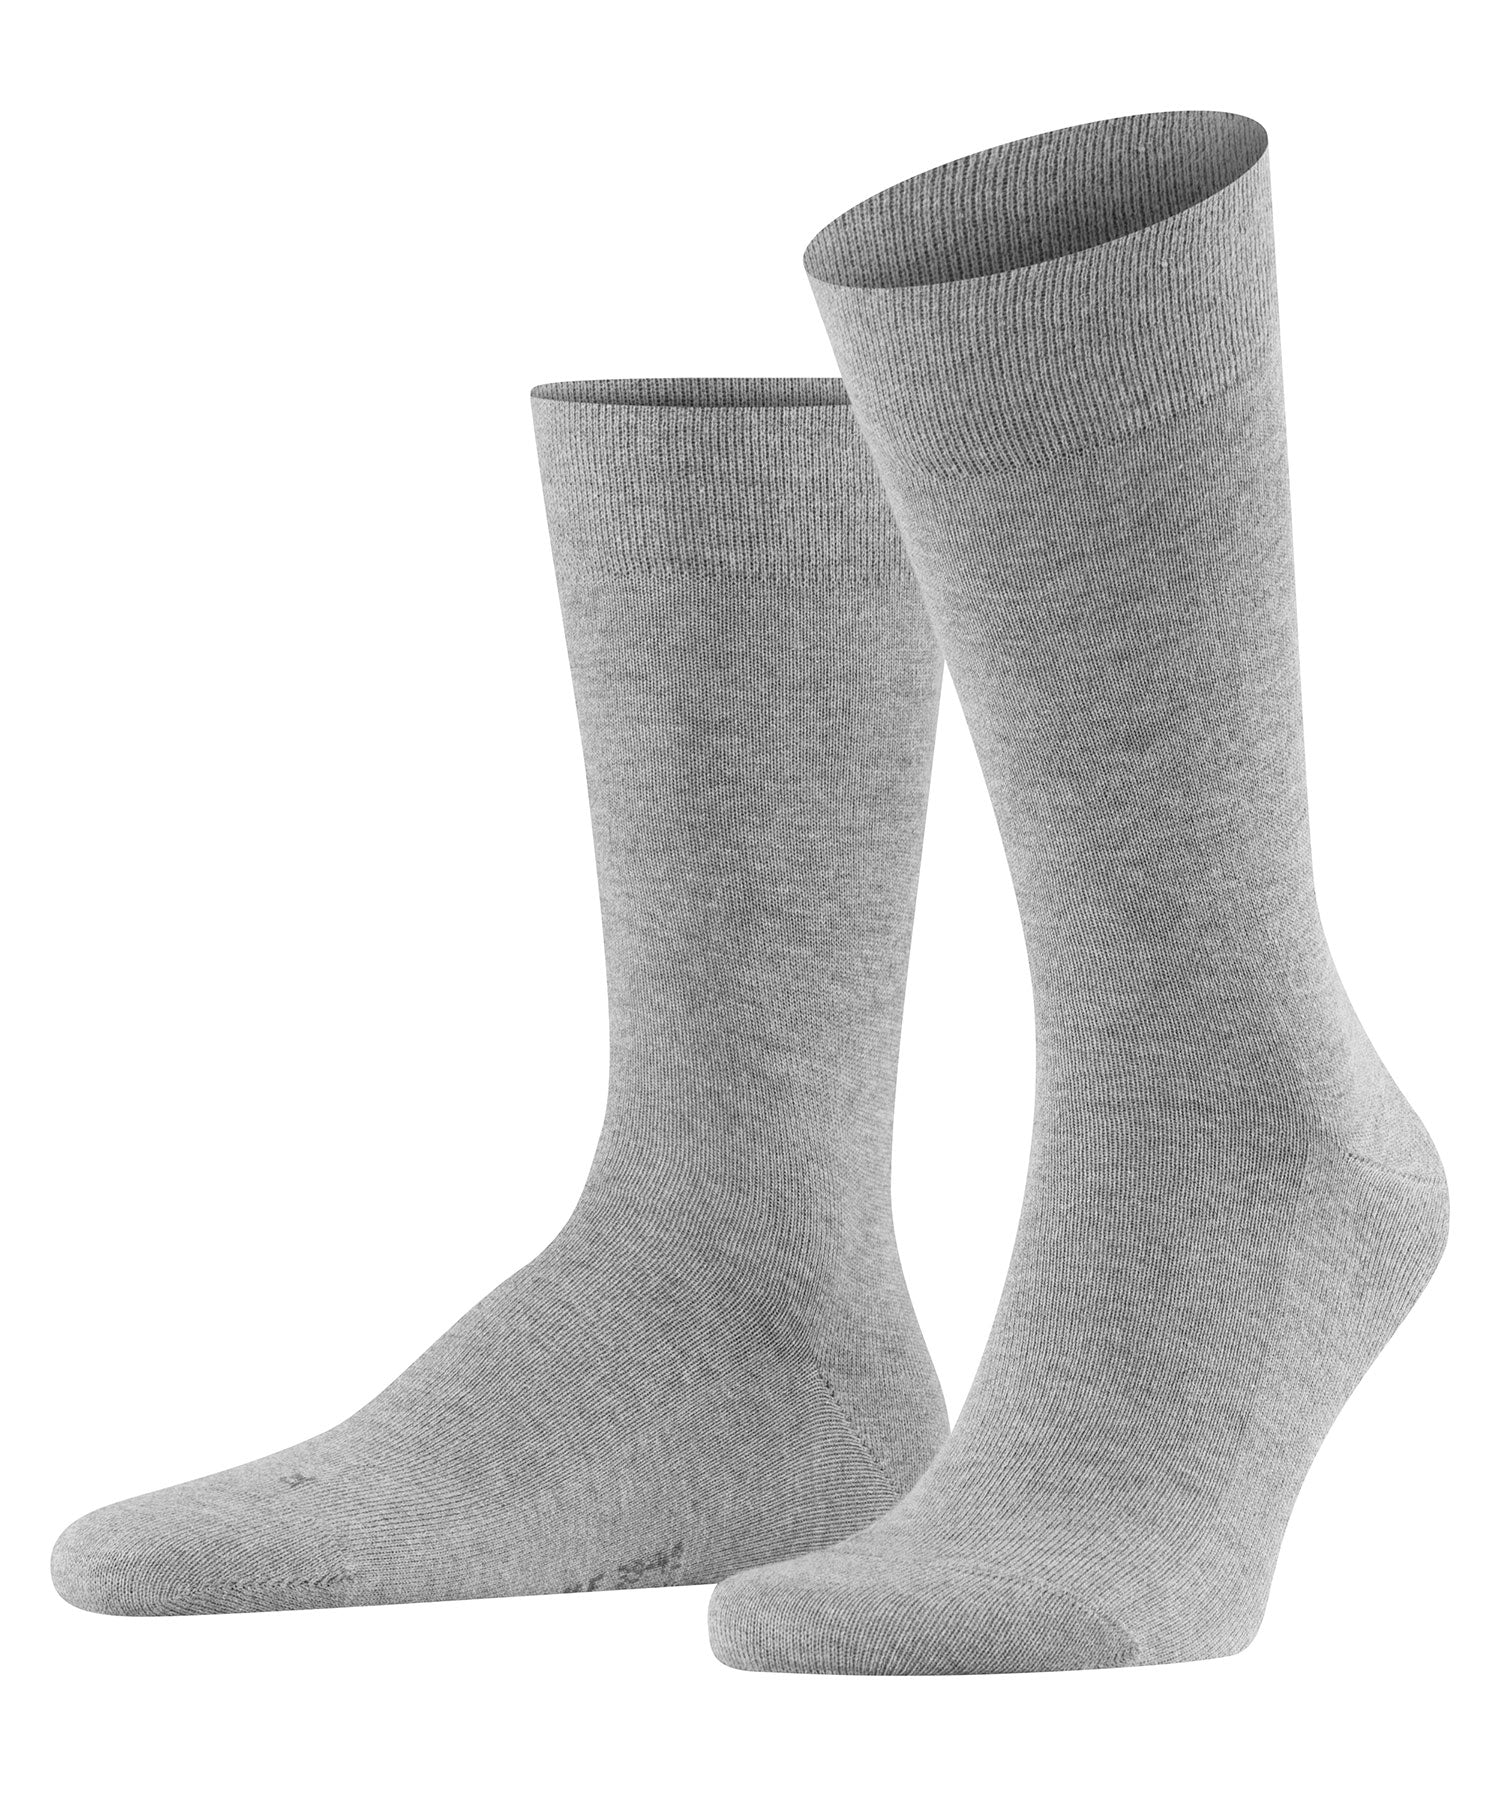 Falke Non Binding Socks, Men's Big & Tall